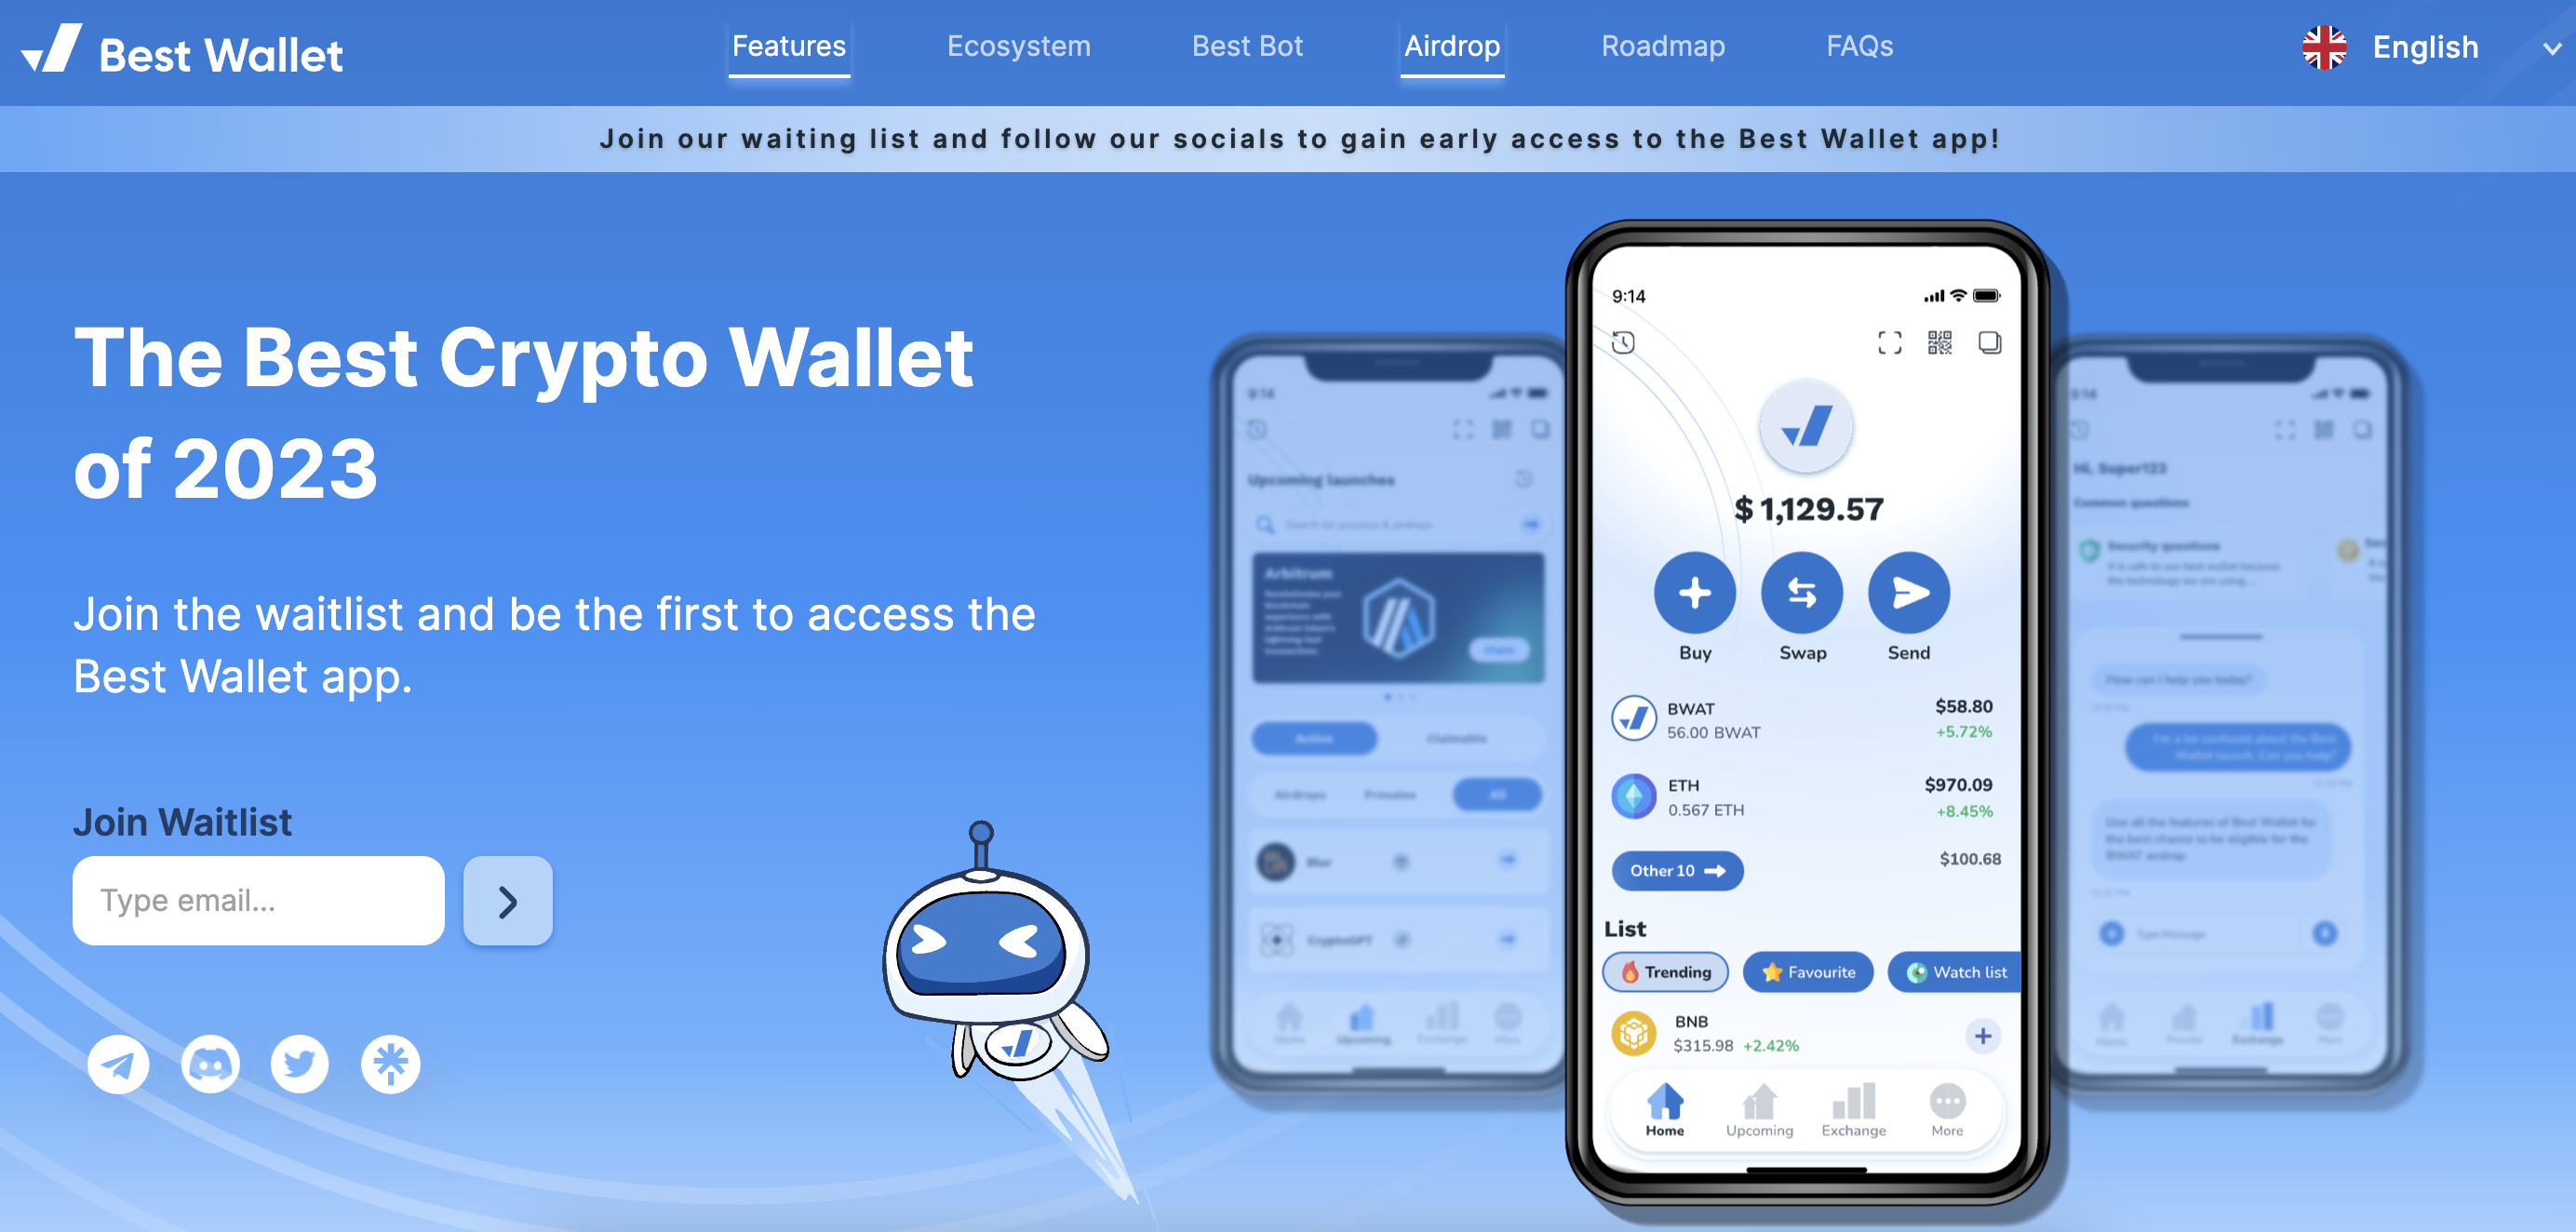 Best Wallet mobile app